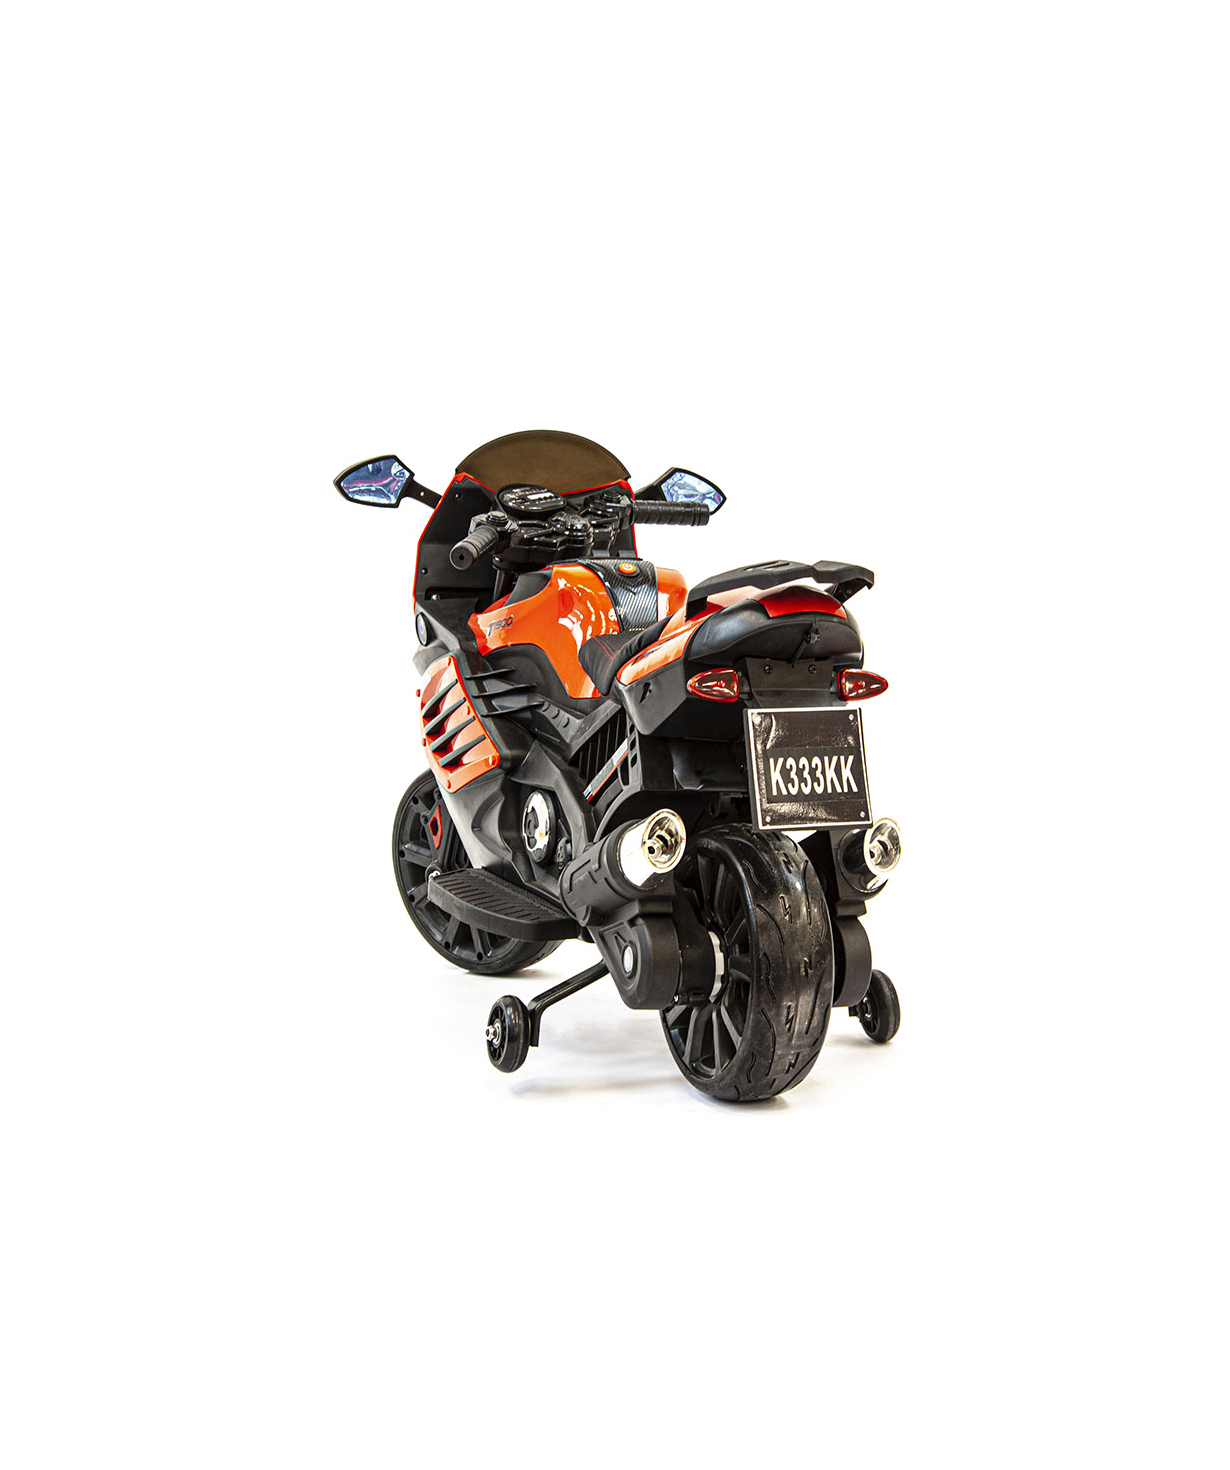 Motorcycle KM8900